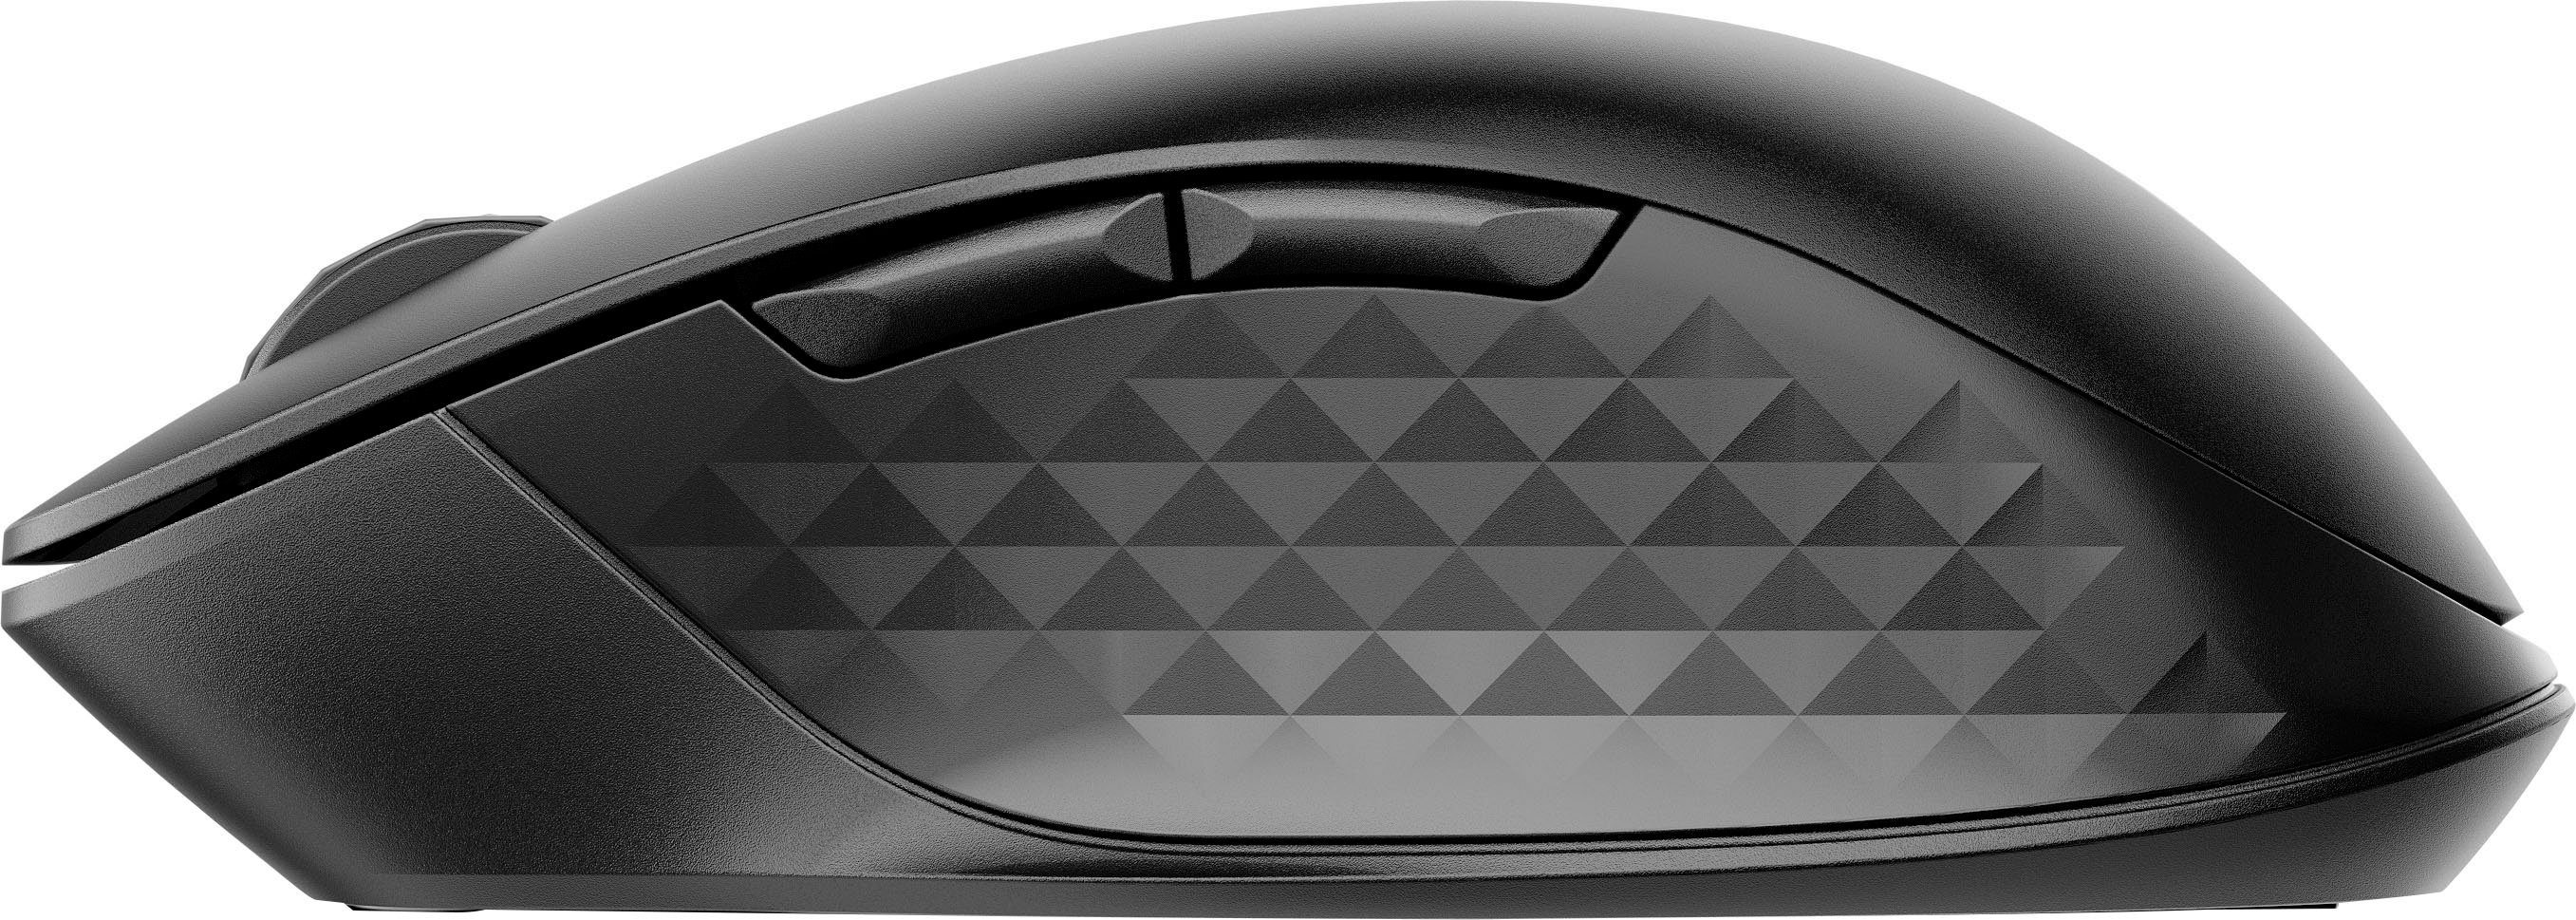 Maus HP 430 (Bluetooth)